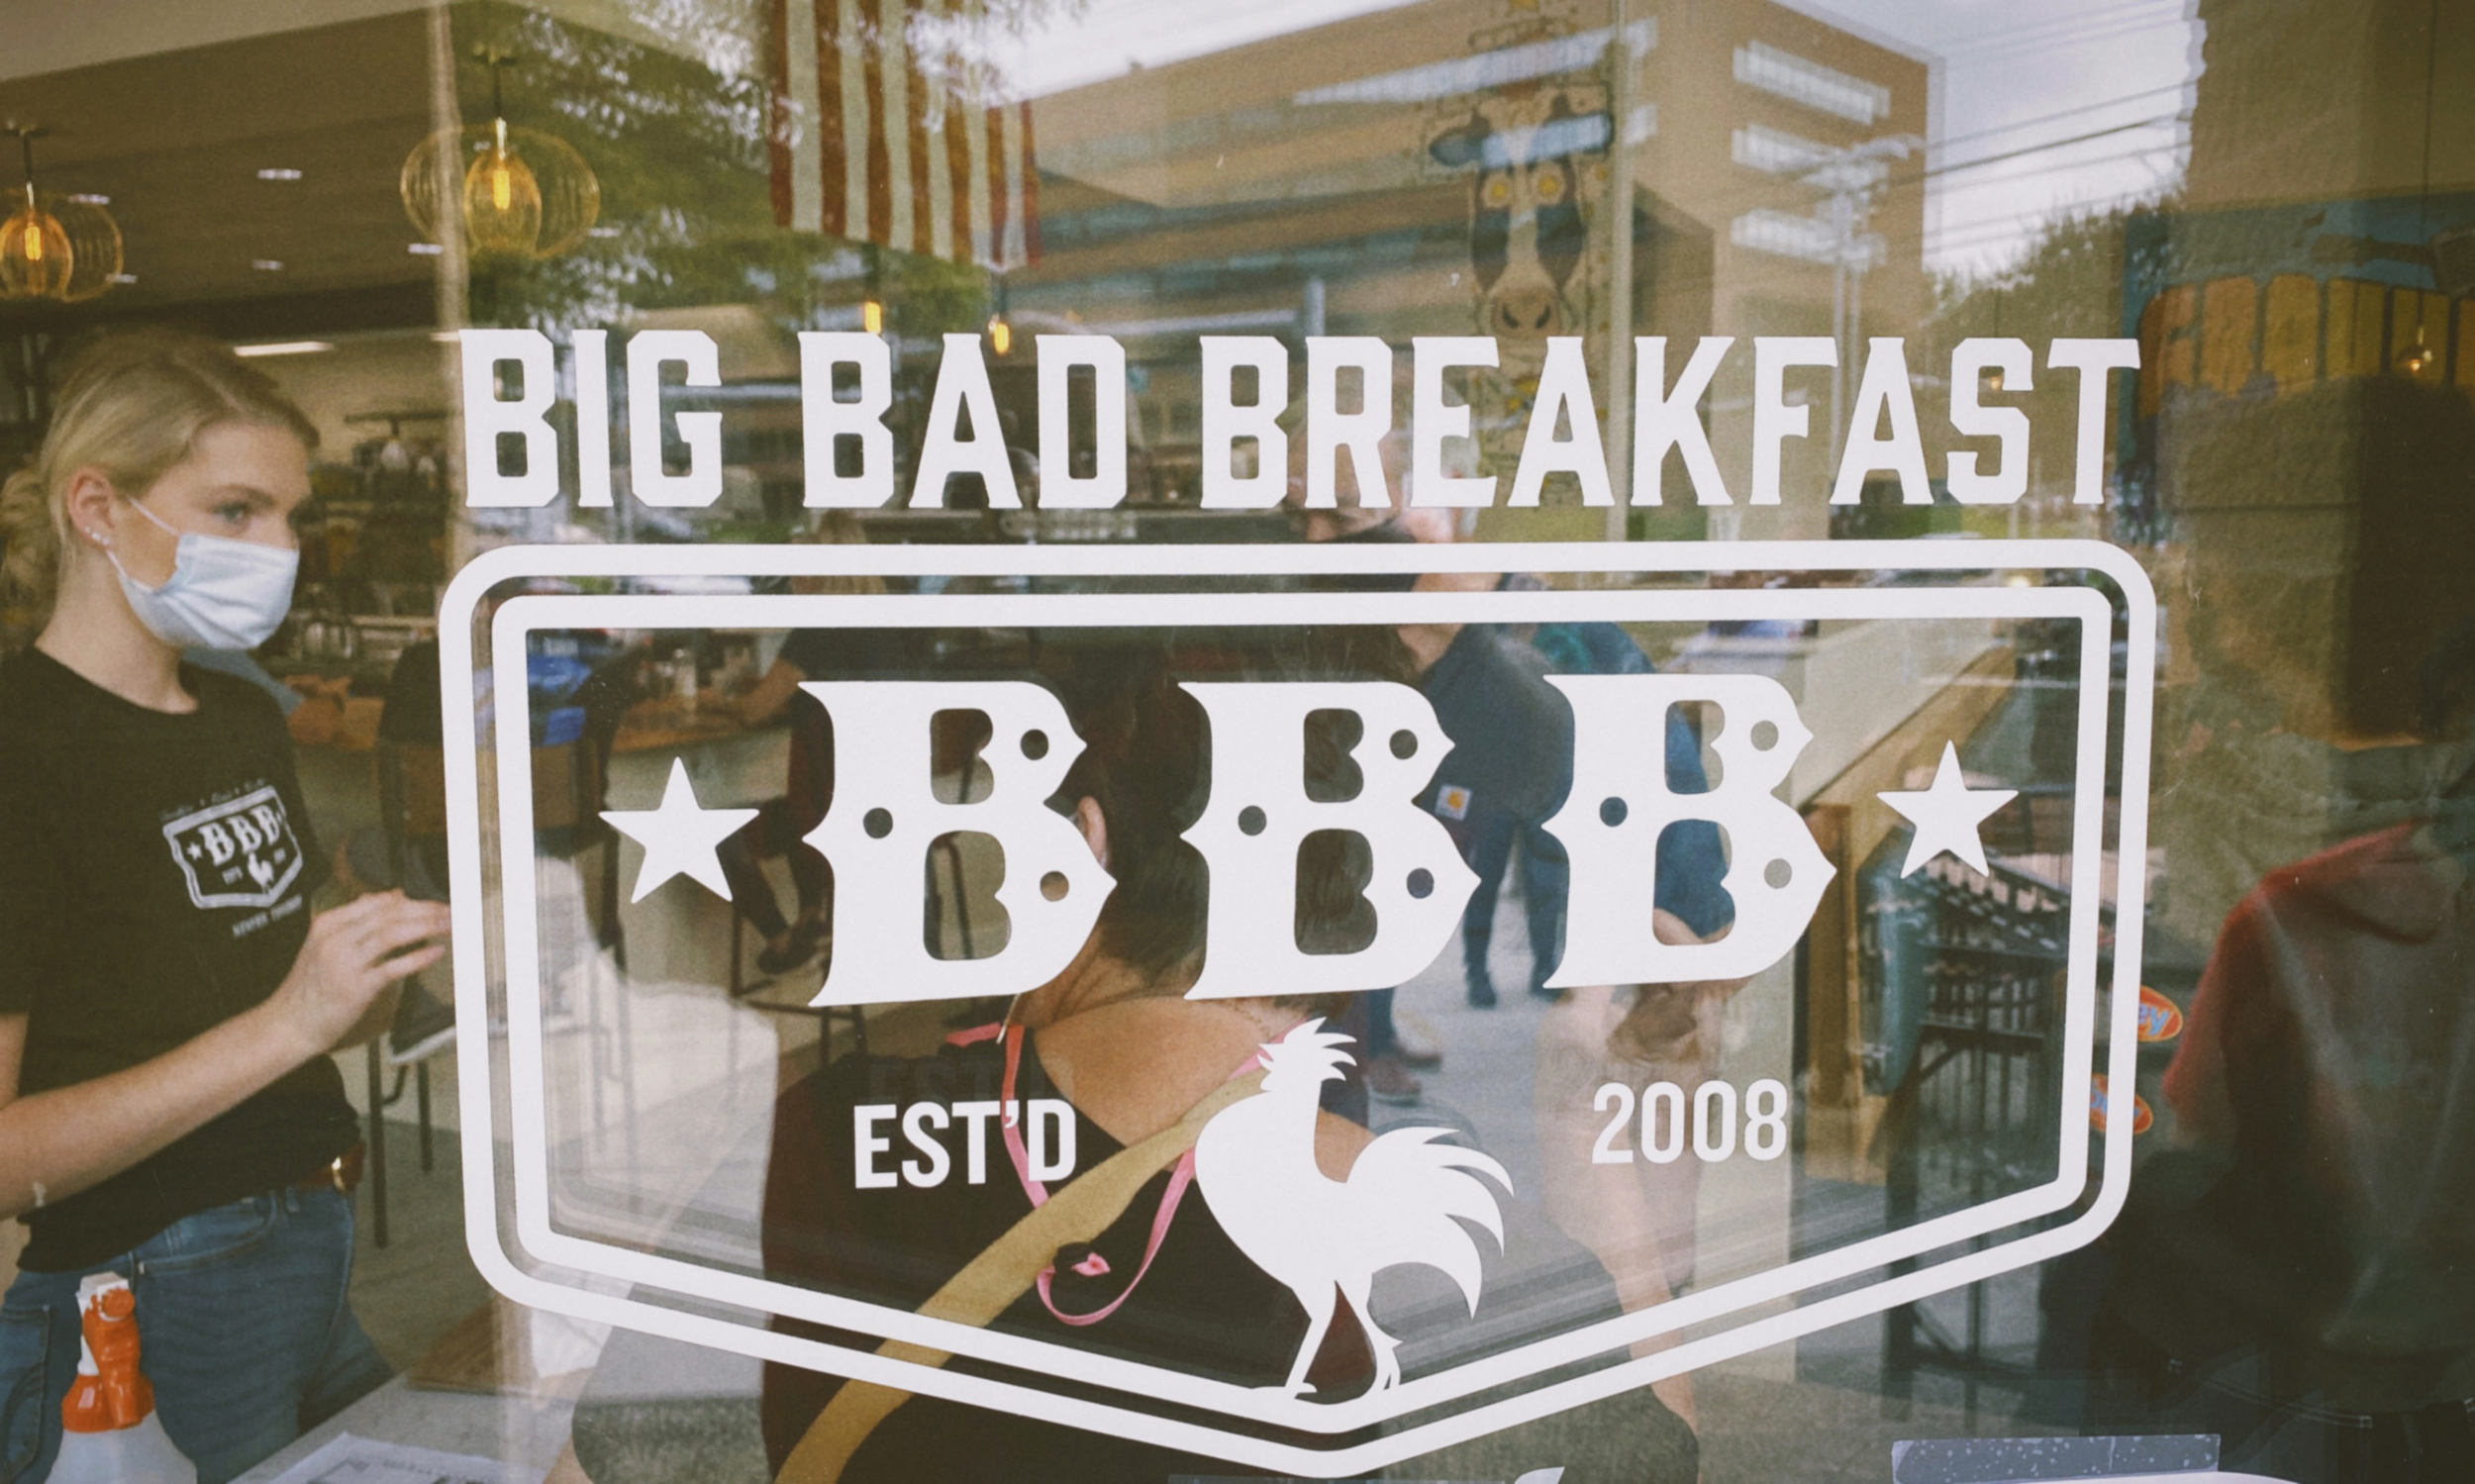 A Big, Good Breakfast at Memphis’ Big Bad Breakfast